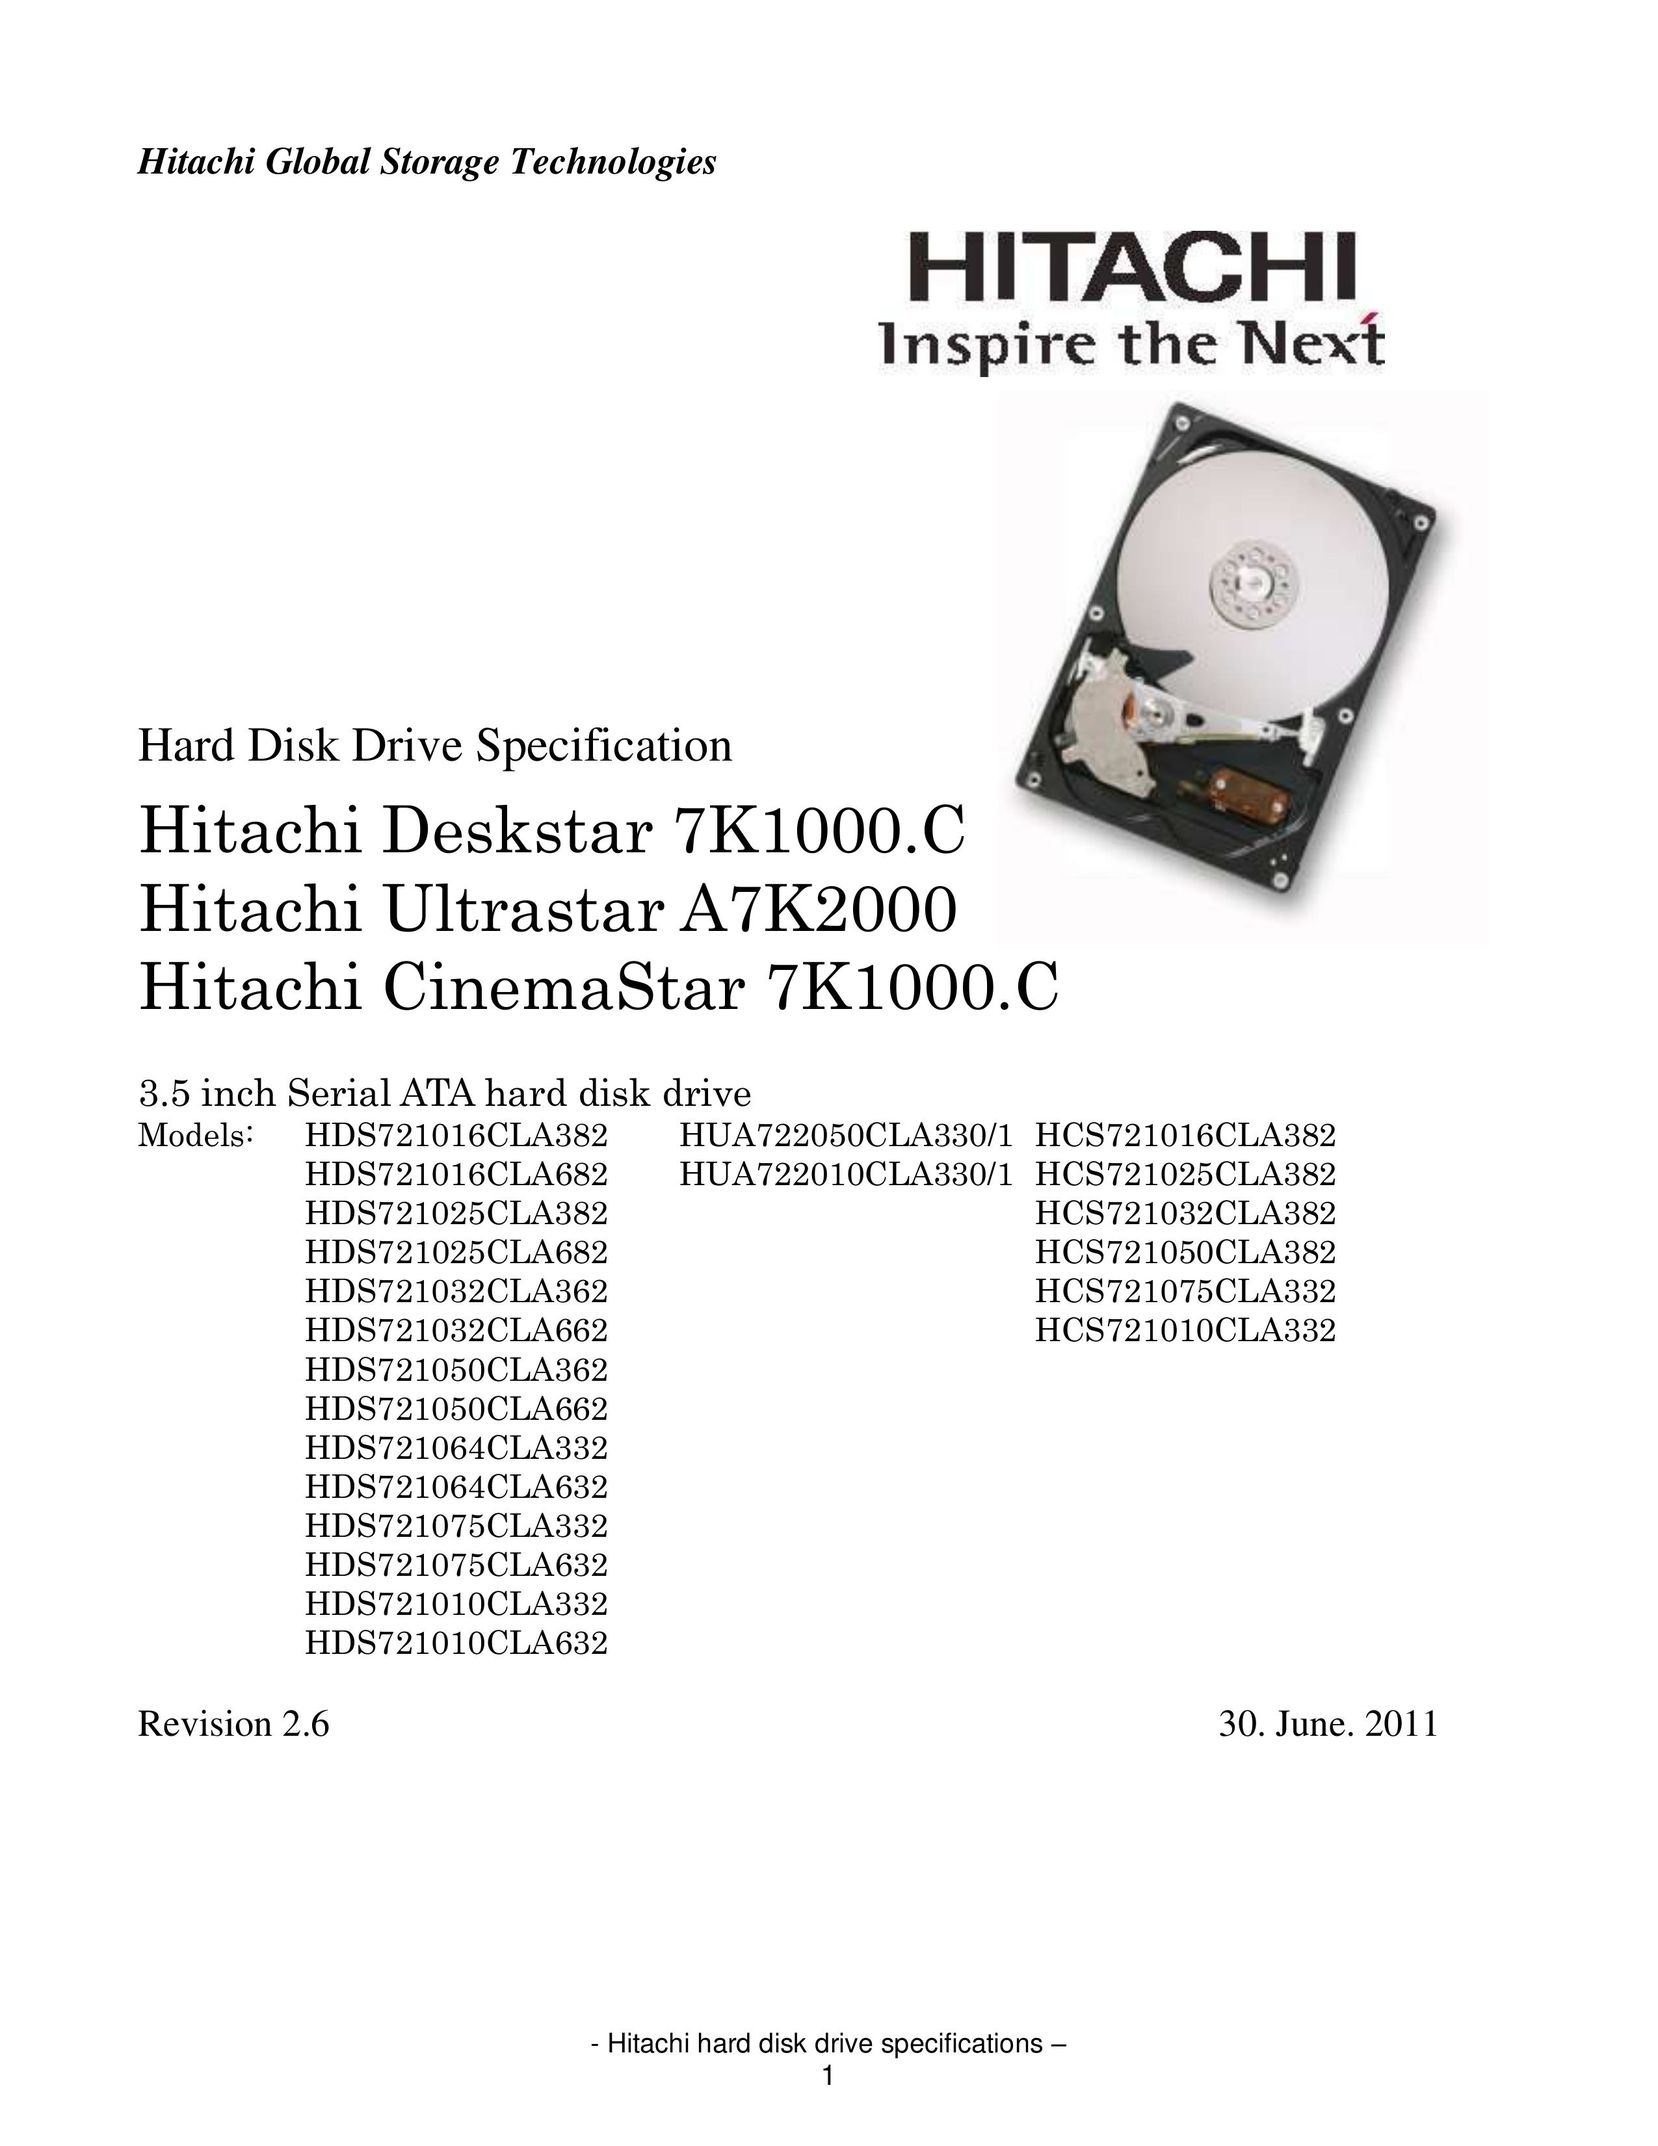 Hitachi HCS721050CLA382 Computer Drive User Manual